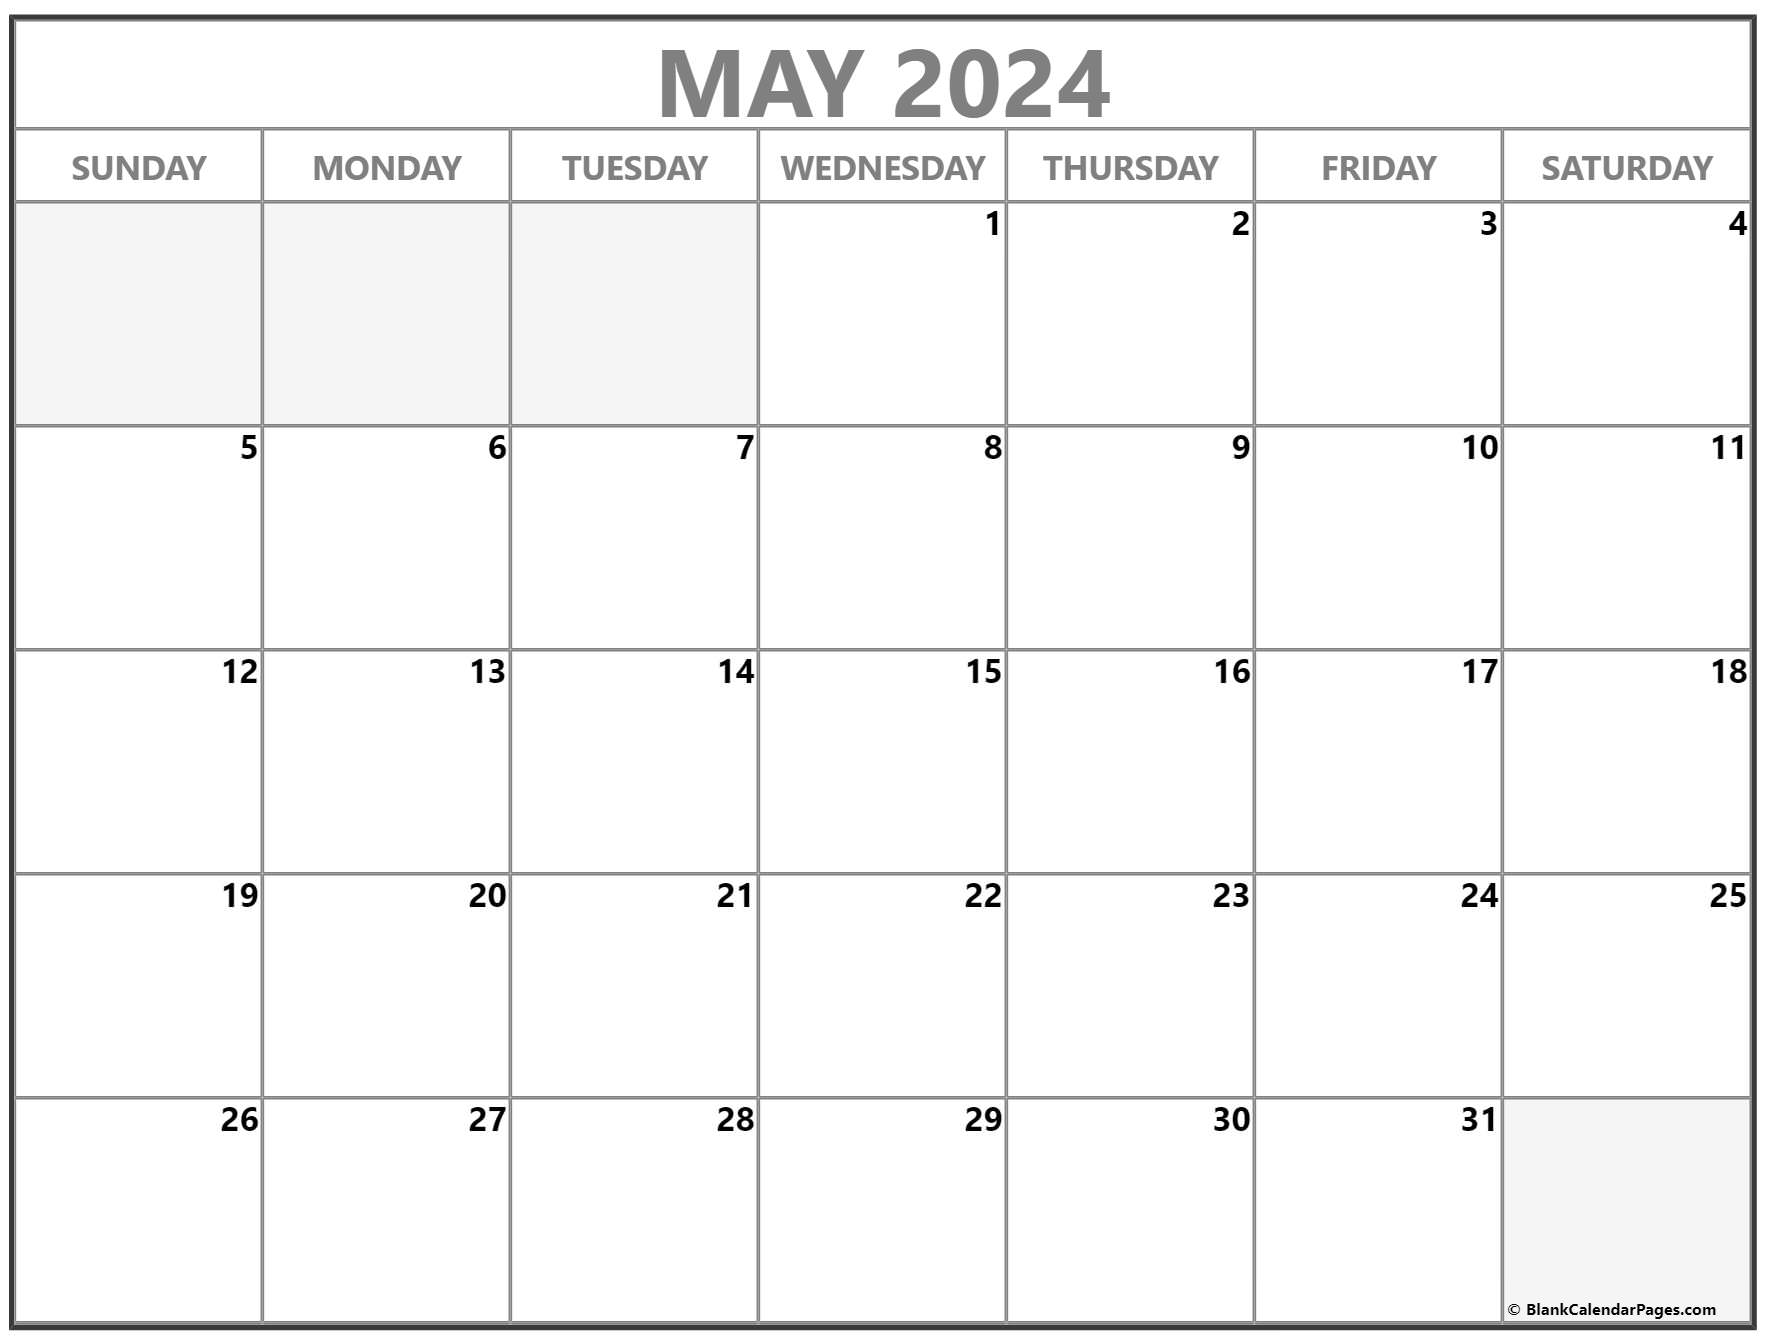 May 2023 Calendar Free Printable Calendar May 2023 Calendar Free Printable Calendar 2023 